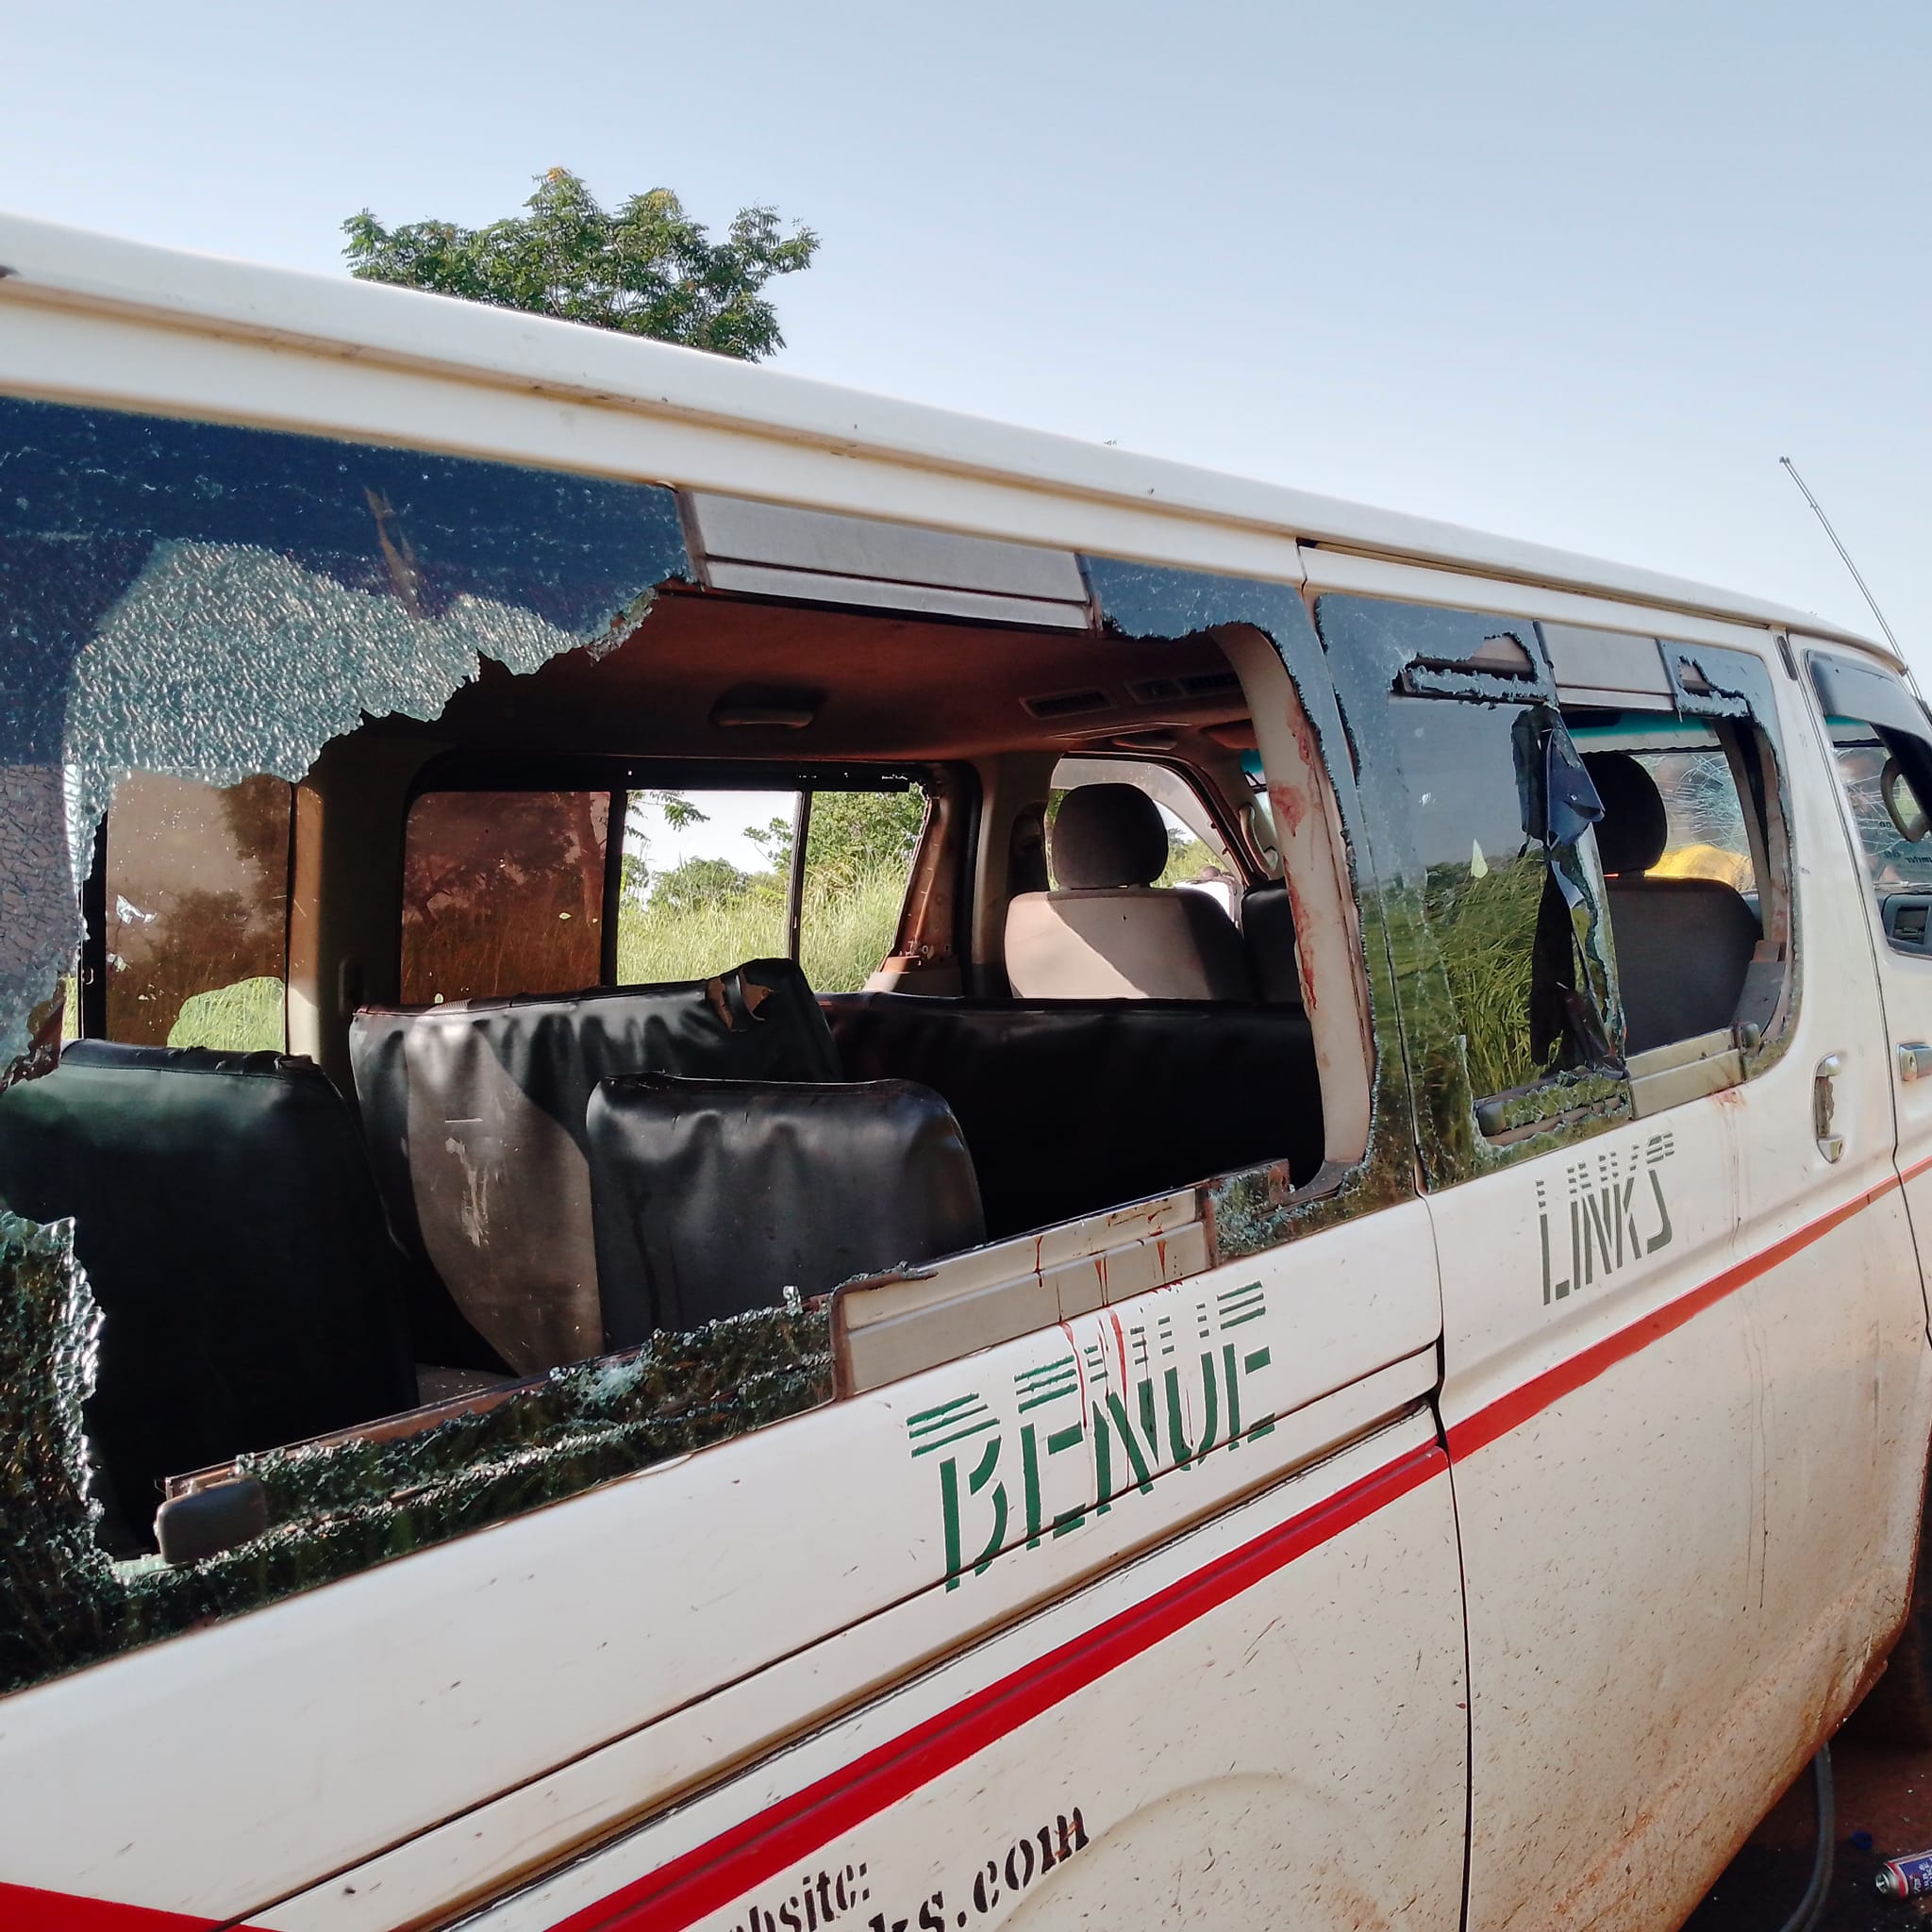 One passenger killed, others injured as suspected herdsmen attack Benue Links bus